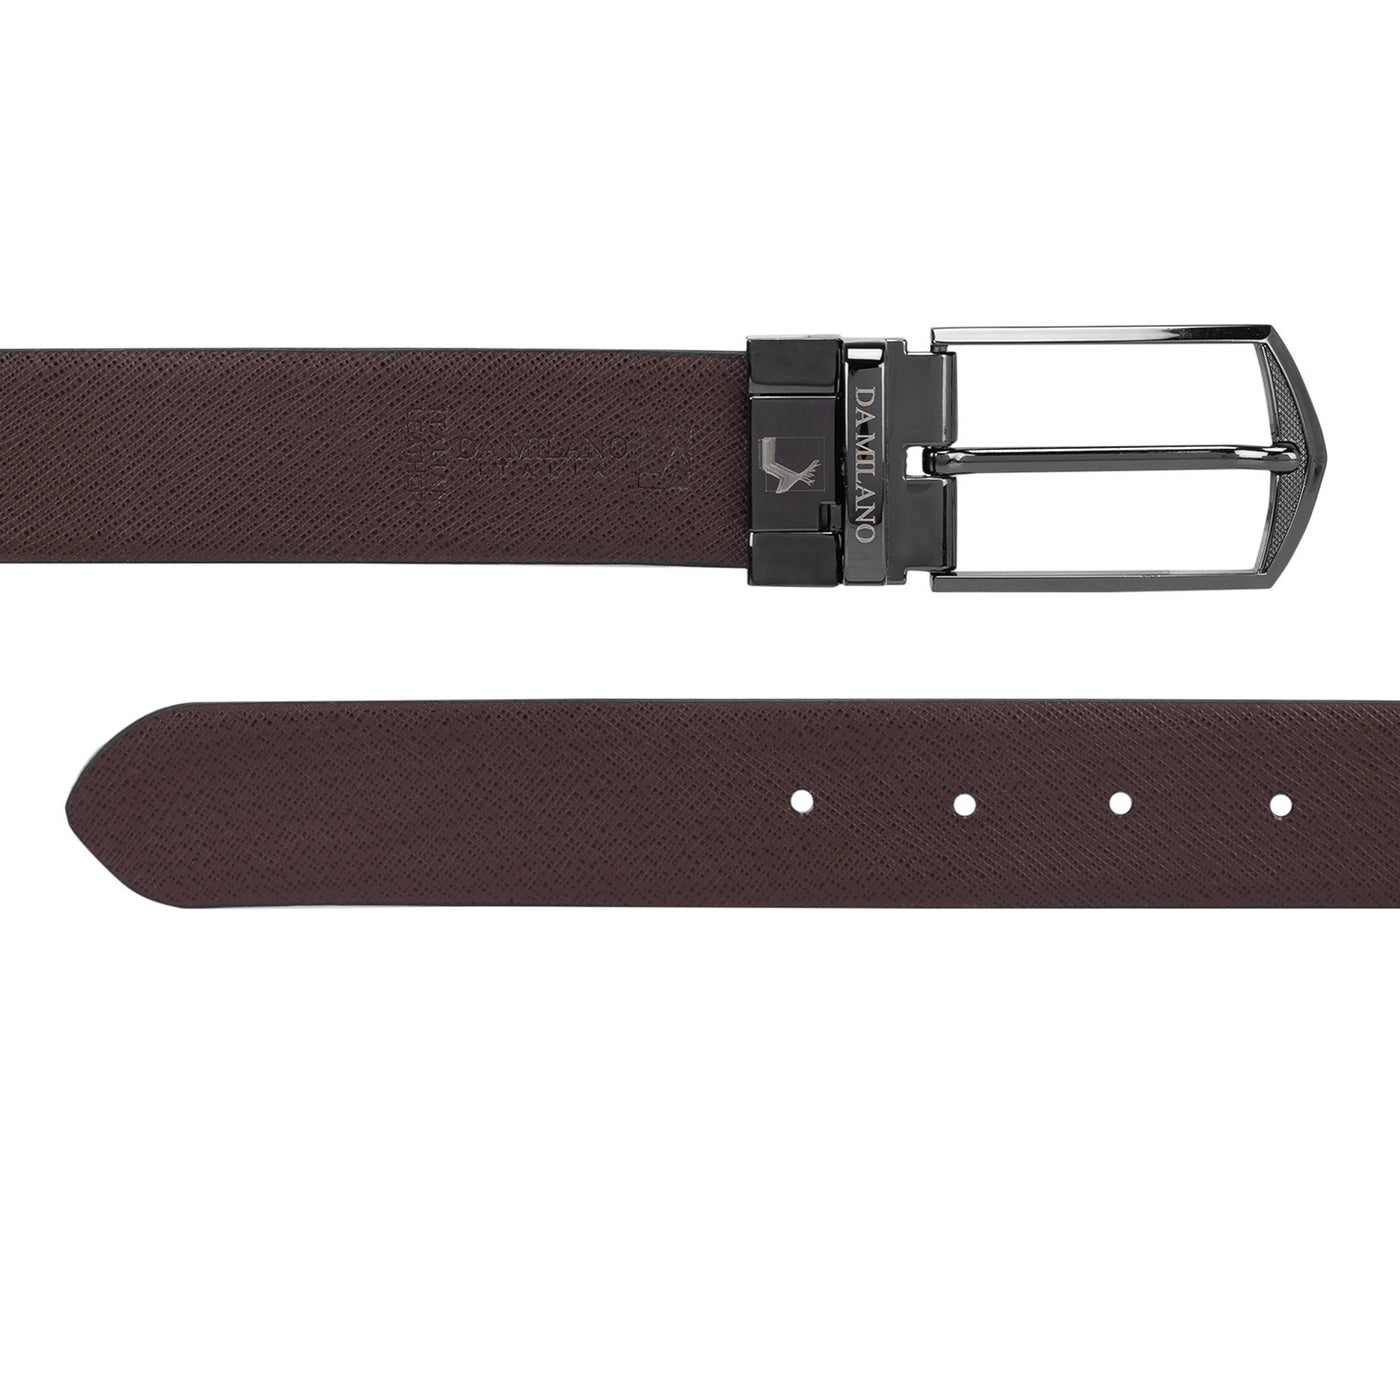 Semi Formal Saffiano Leather Mens Belt - Black